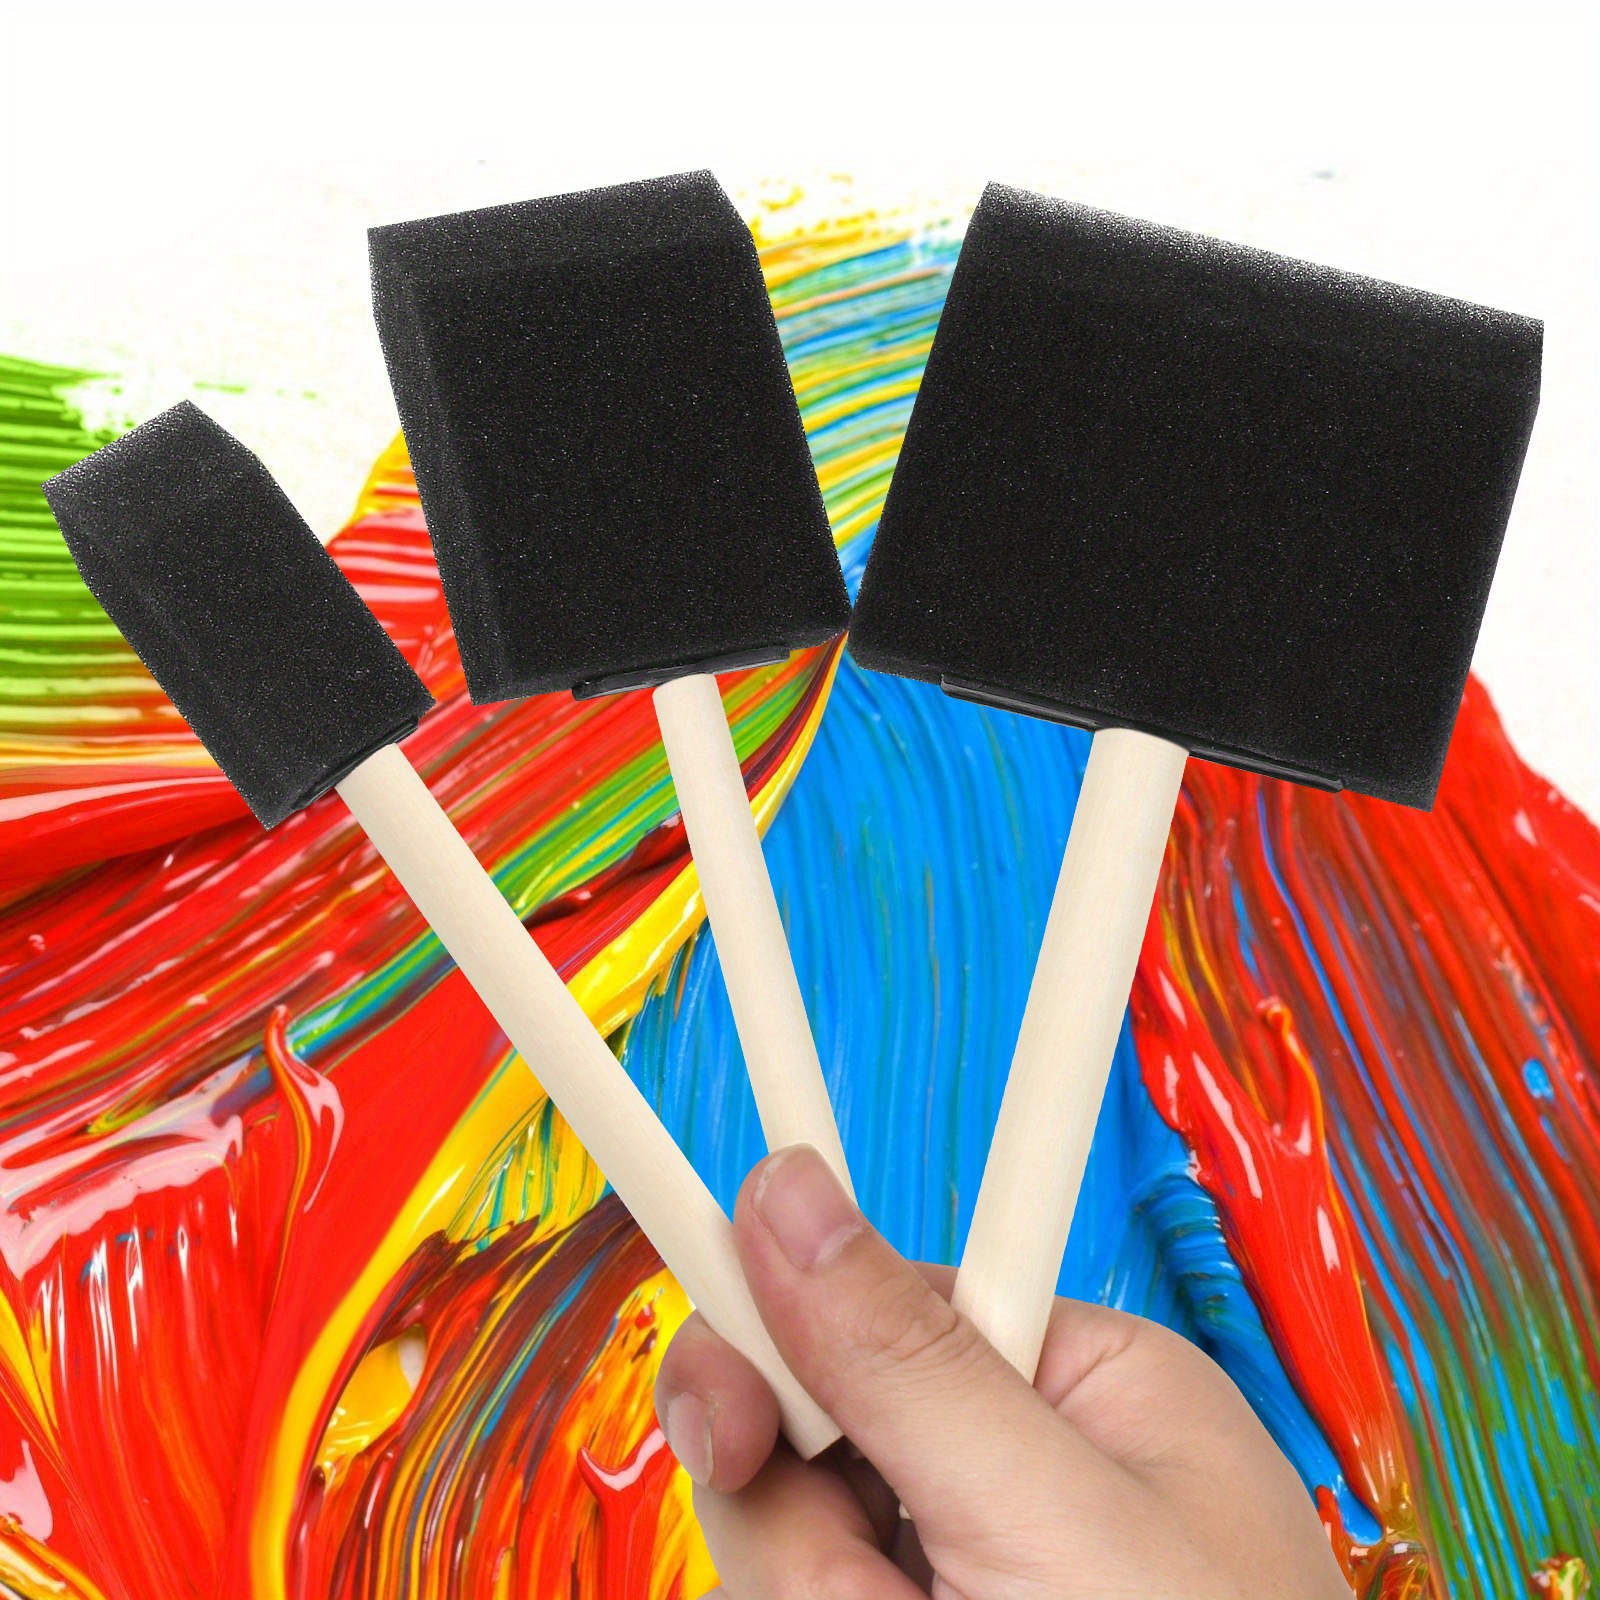 Foam Brush Set Foam Paint Brushes Wood Handle Sponge Brushes - Temu